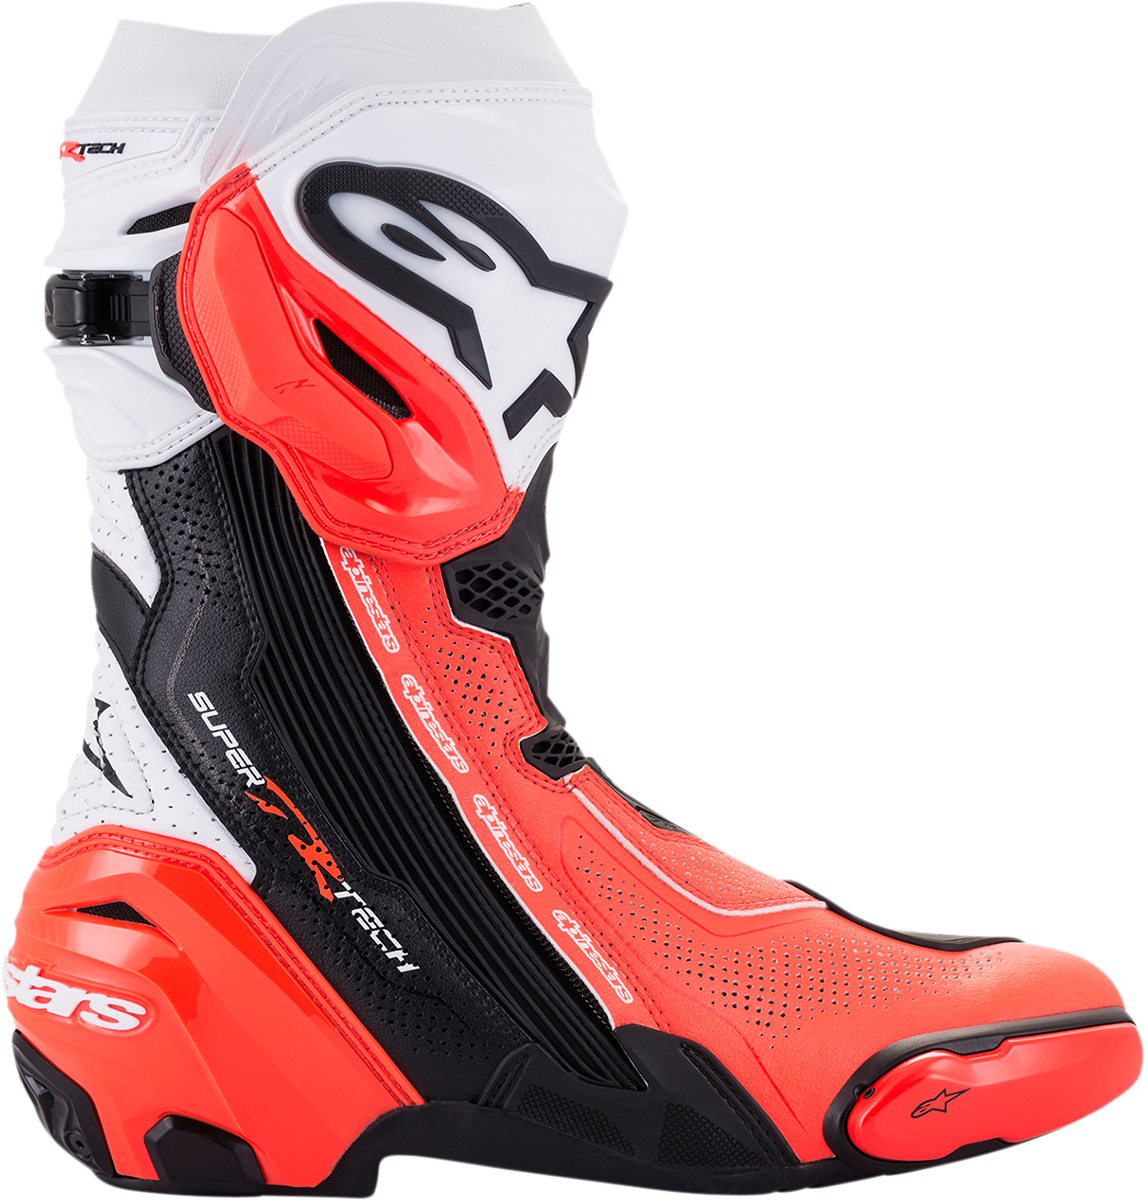 ALPINESTARS Supertech V Boots - Black/Fluo Red/White - US 7.5 / EU 41 2220121-124-41